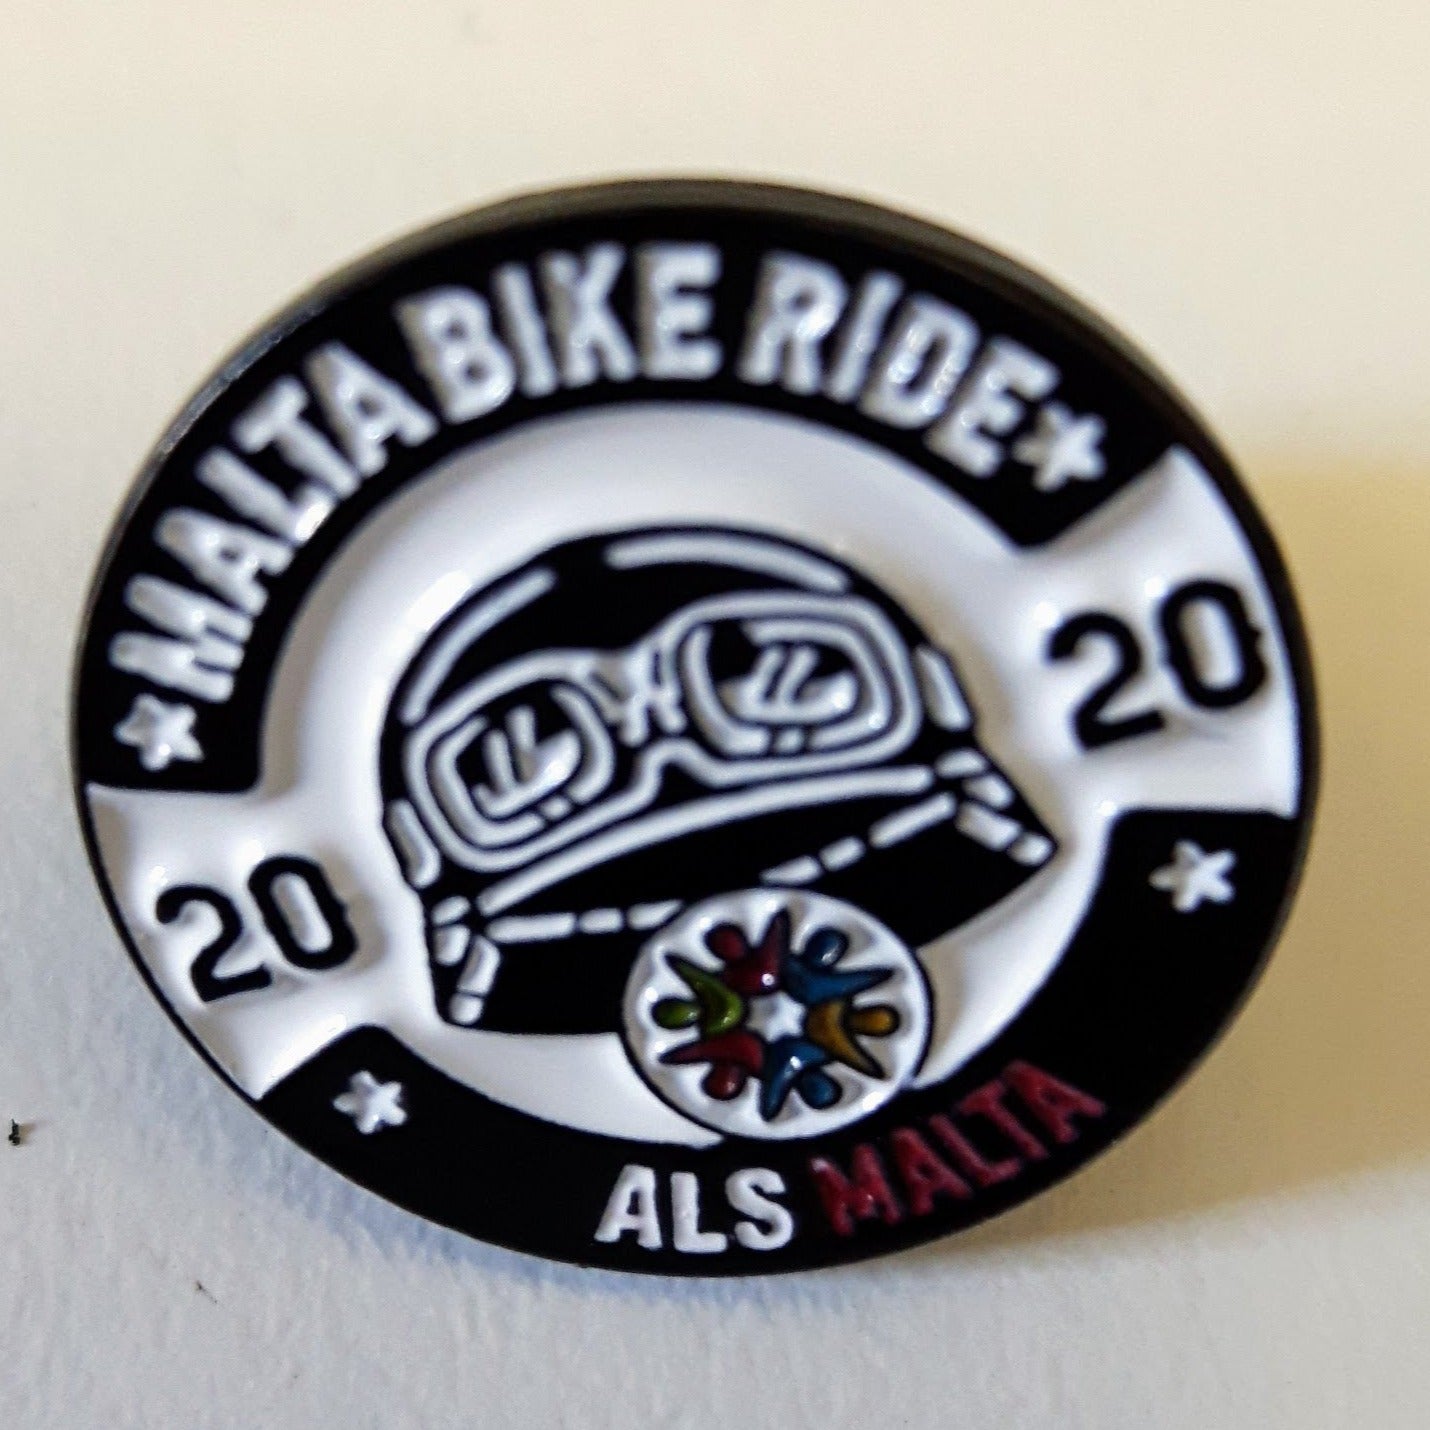 Malta Bike Ride 2020 Pin